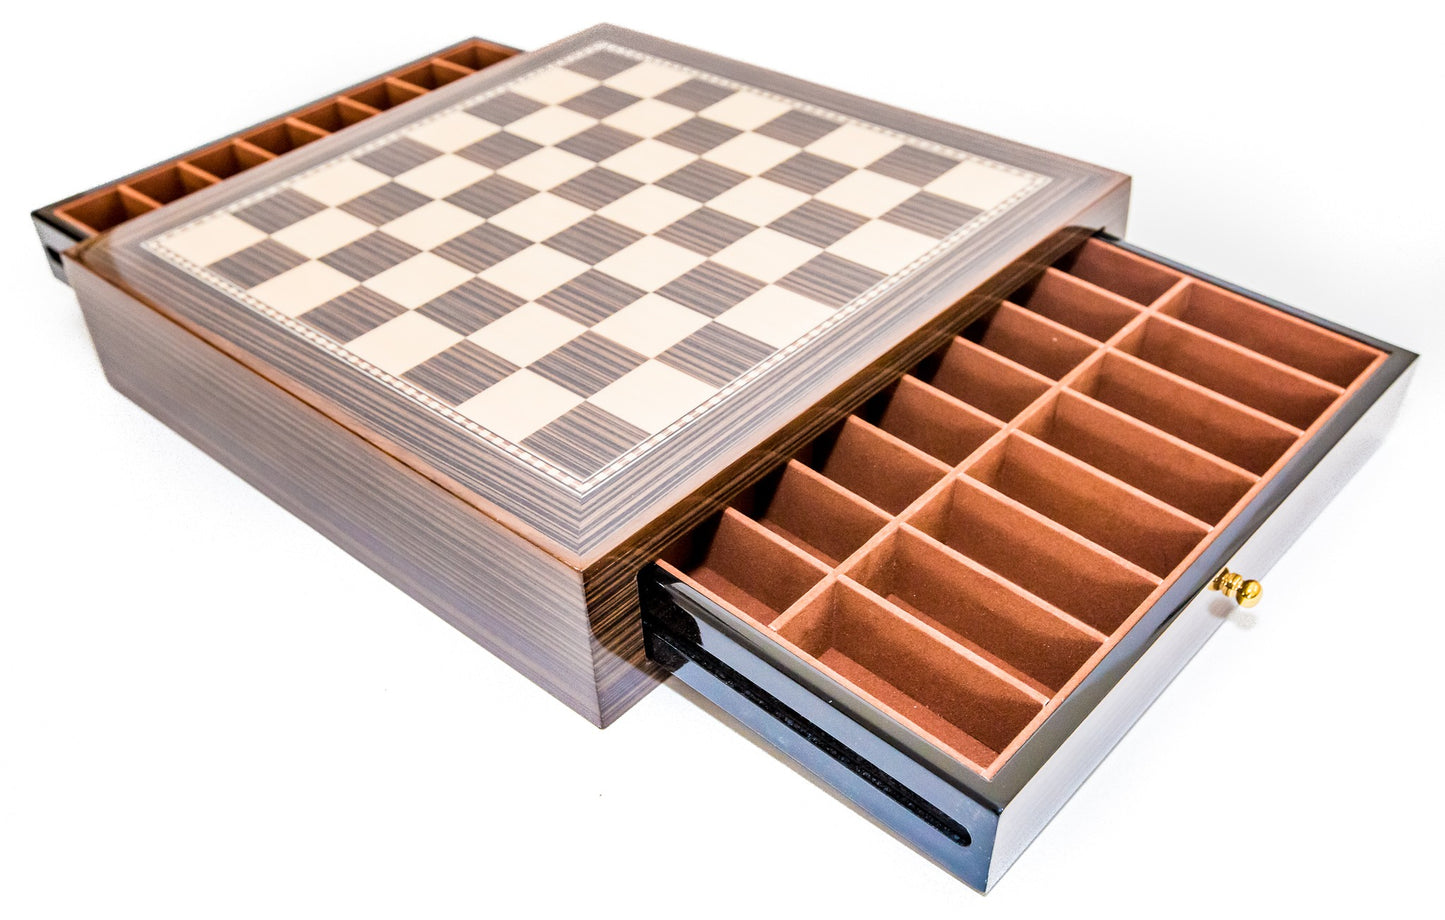 15.5 inch Deluxe Chess Board Case open